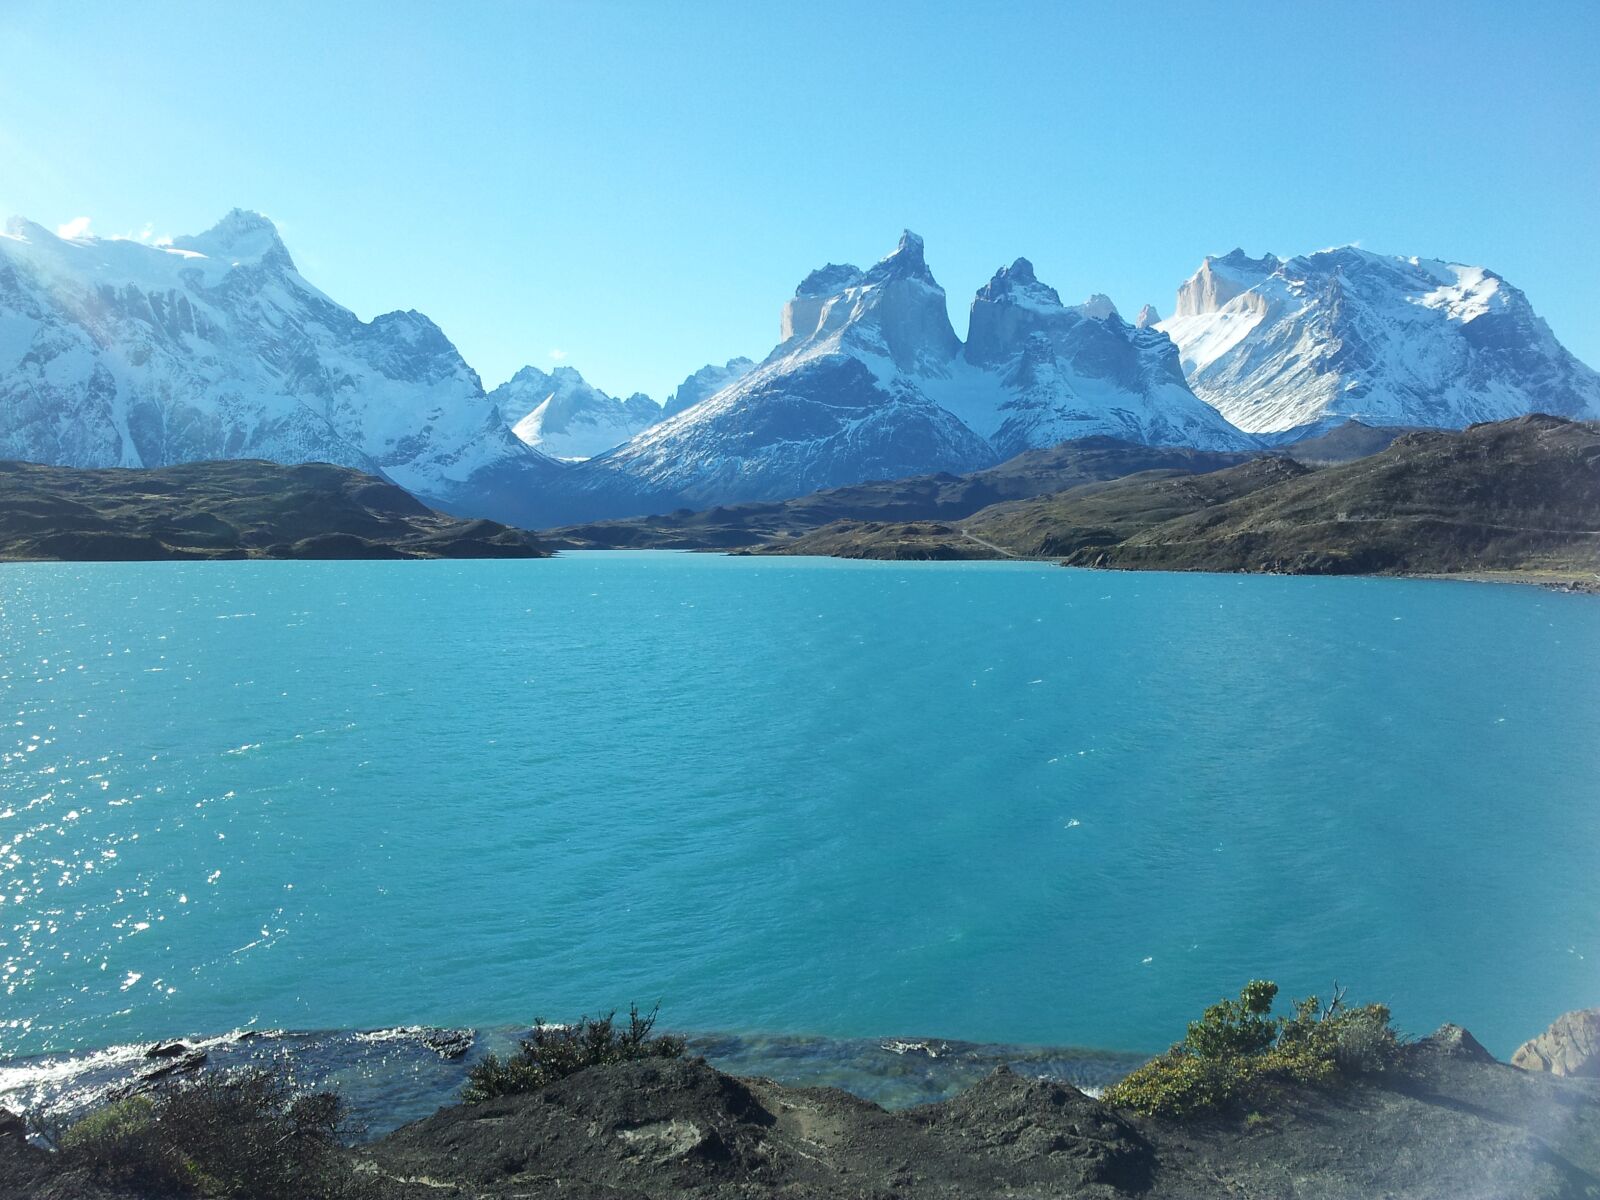 Samsung Galaxy S2 sample photo. Lake pehoe, patagonia, chile photography